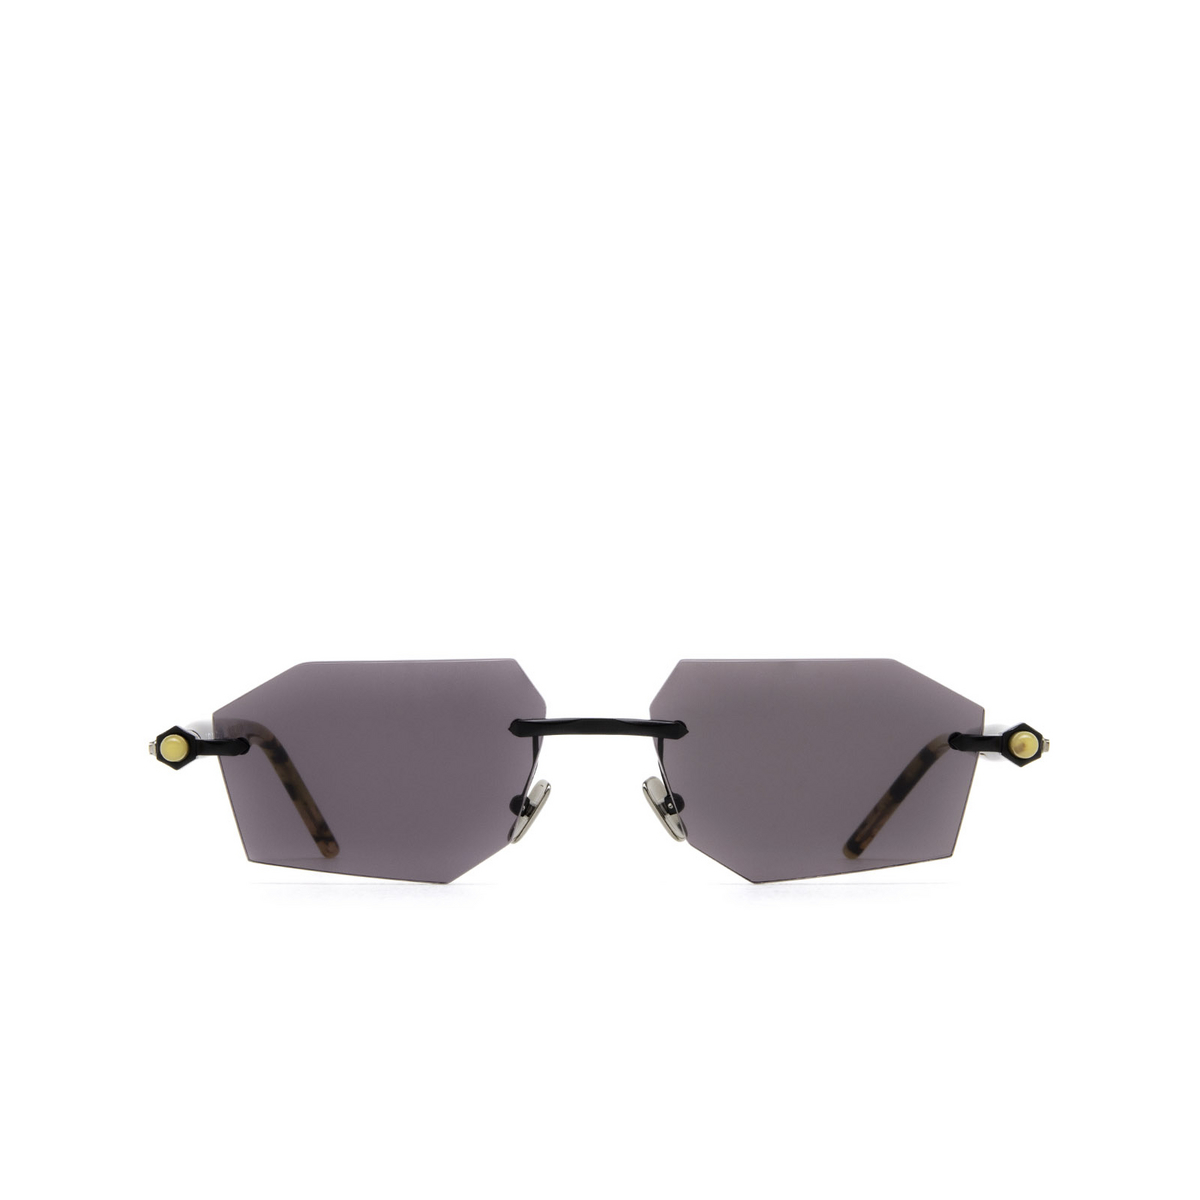 Kuboraum® Irregular Sunglasses: P55 color Black Matt & Black Shine Tortoise Bm Tr - front view.